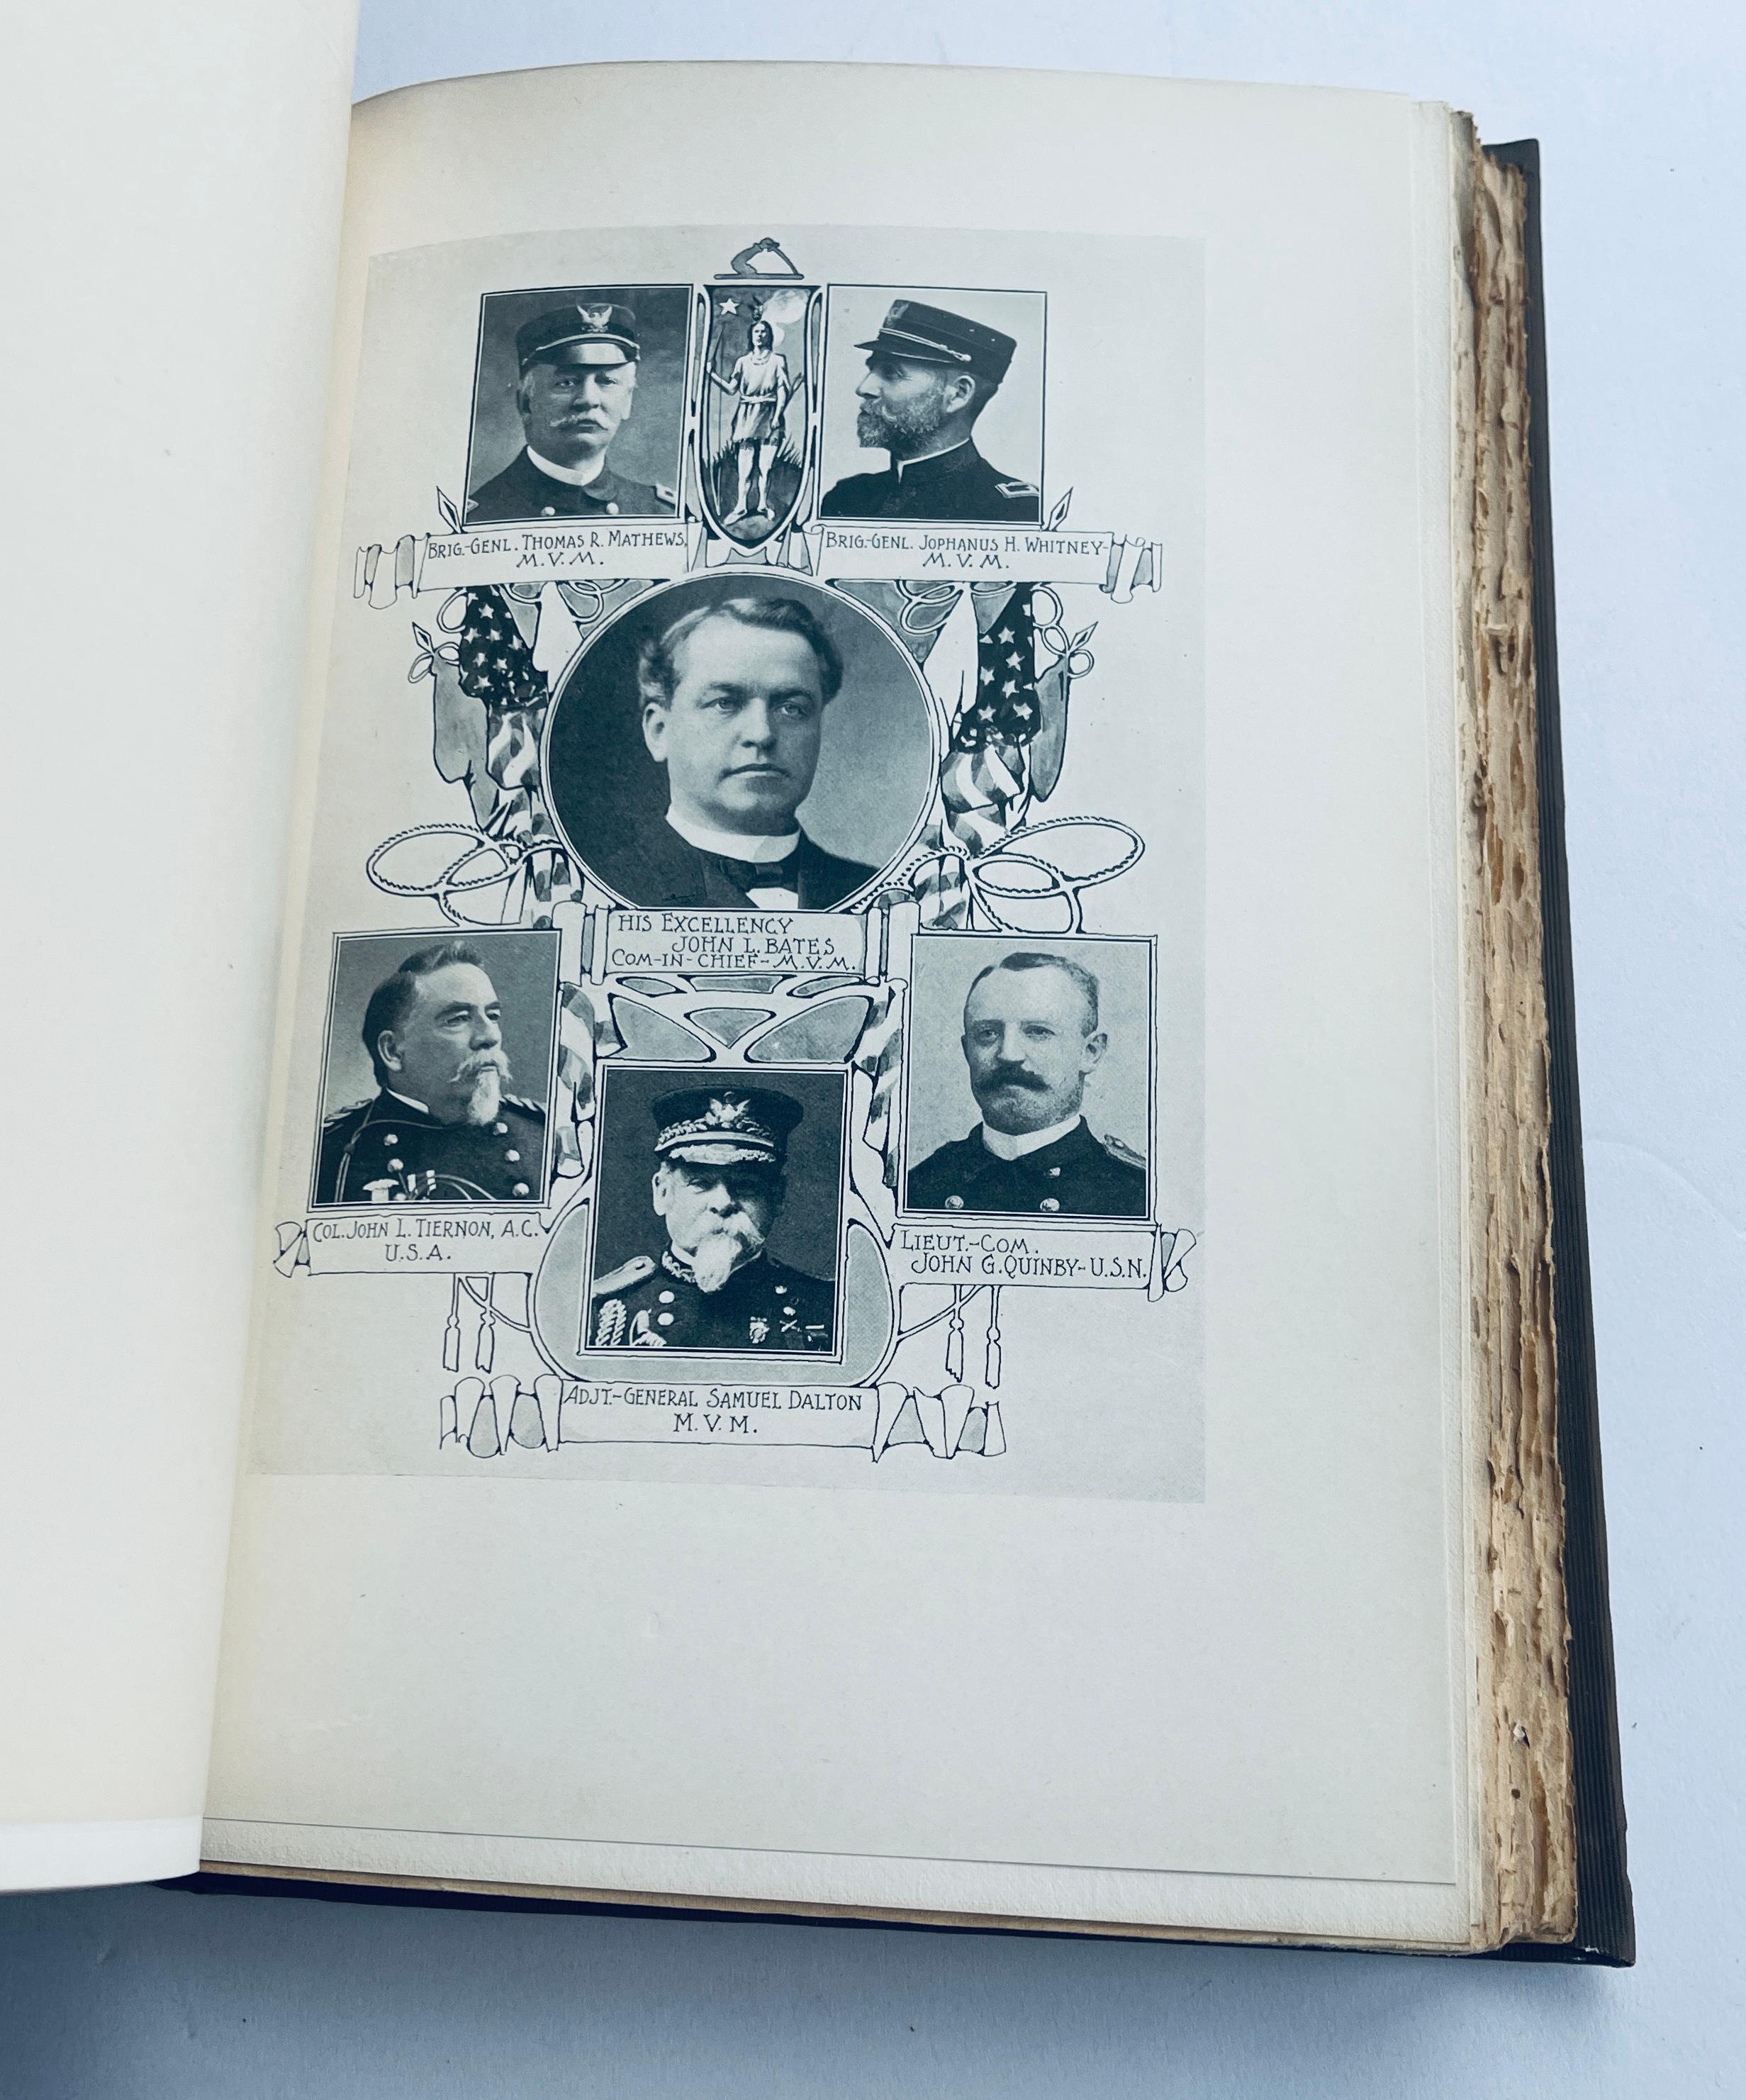 RAREST Civil War Major General JOSEPH HOOKER Commemoration WITH INVITATIONS (1903)